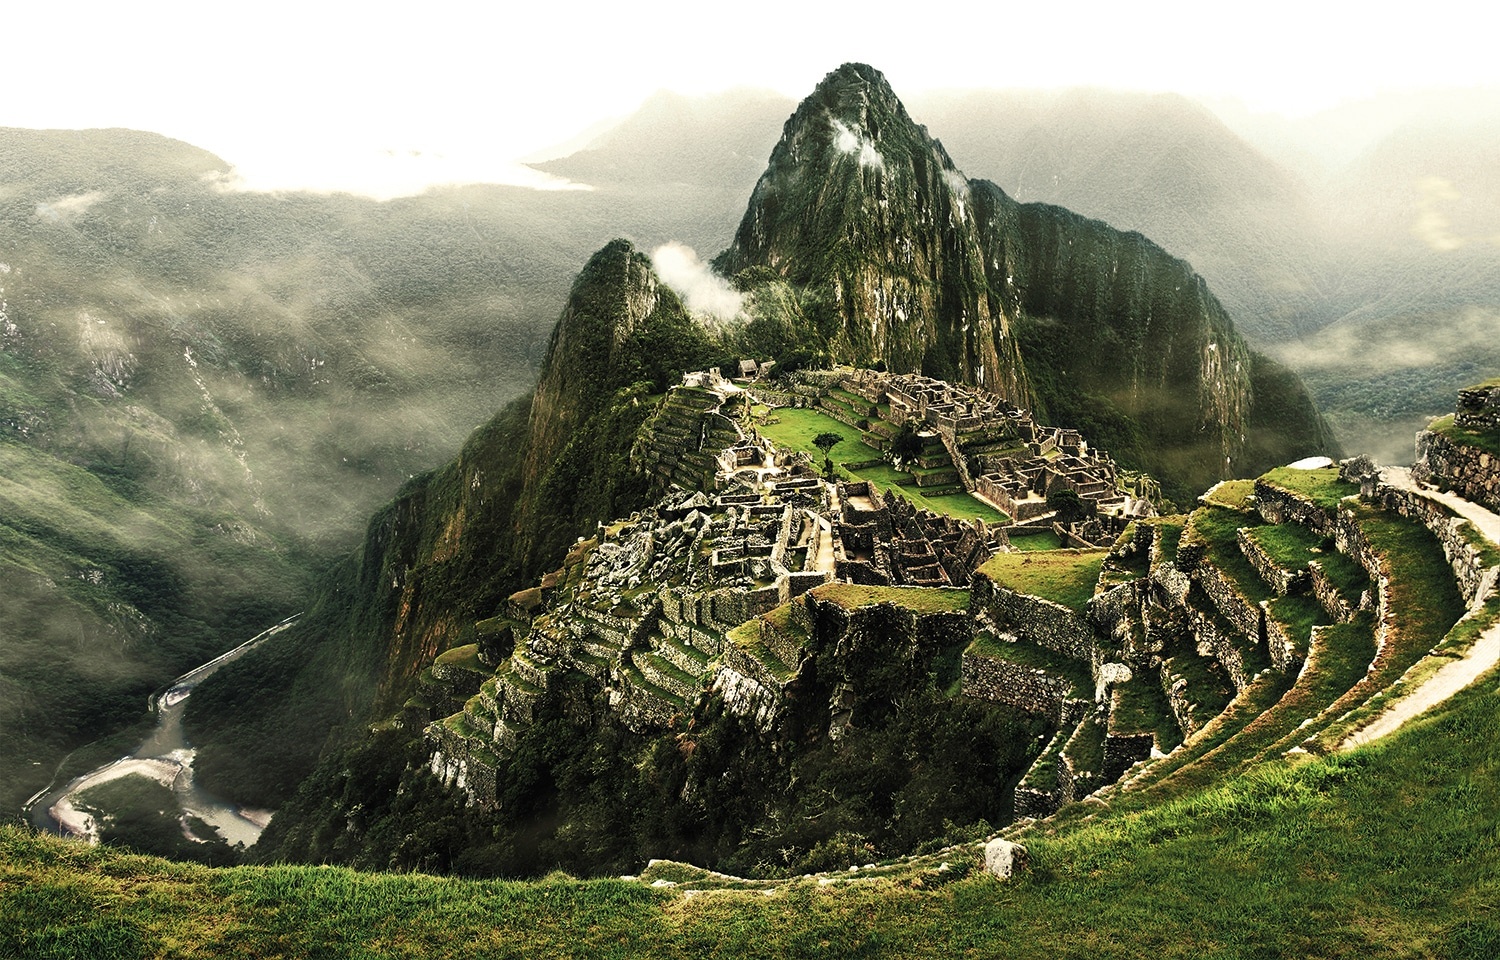 PAPERMOON Fototapete "Machu Picchu" Tapeten Gr. B/L: 5 m x 2,8 m, Bahnen: 10 St., bunt (mehrfarbig) Fototapeten